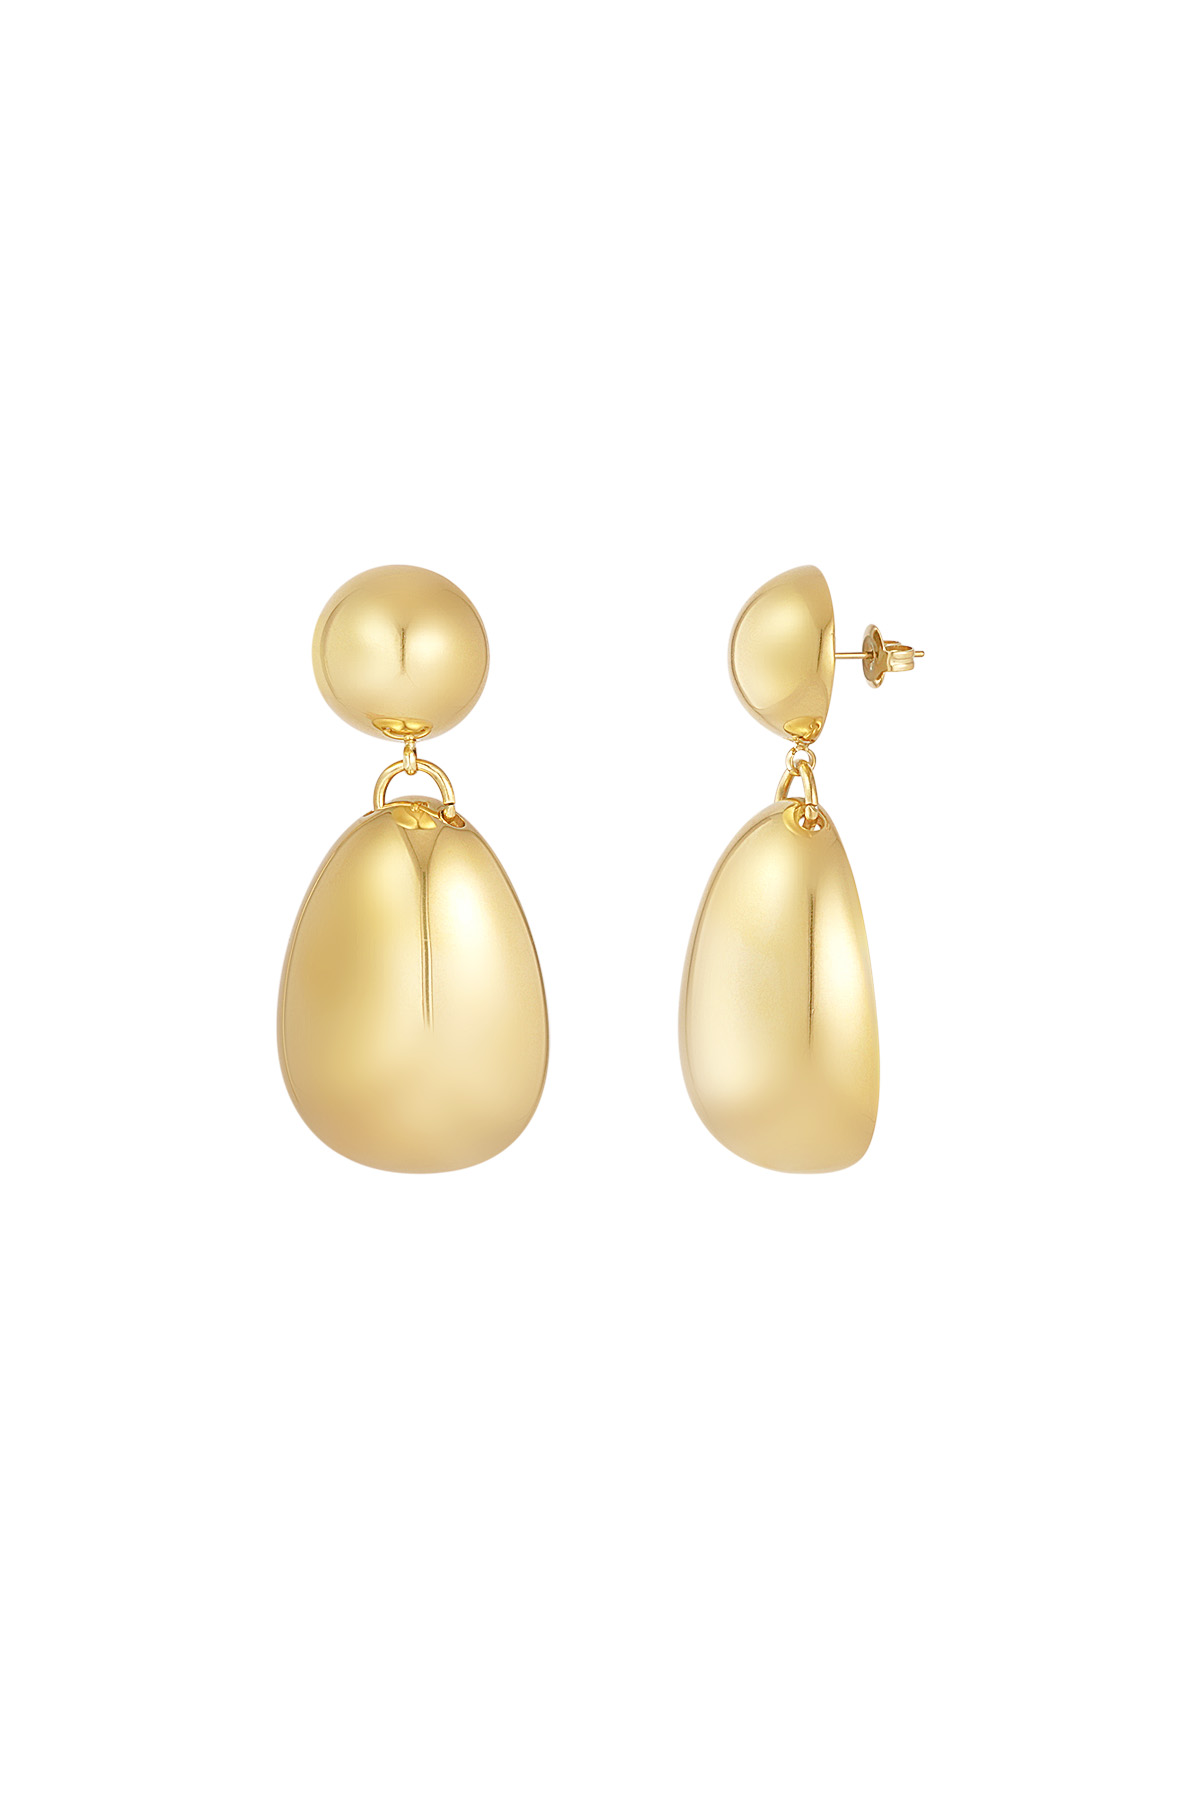 Earrings classic crush - gold h5 